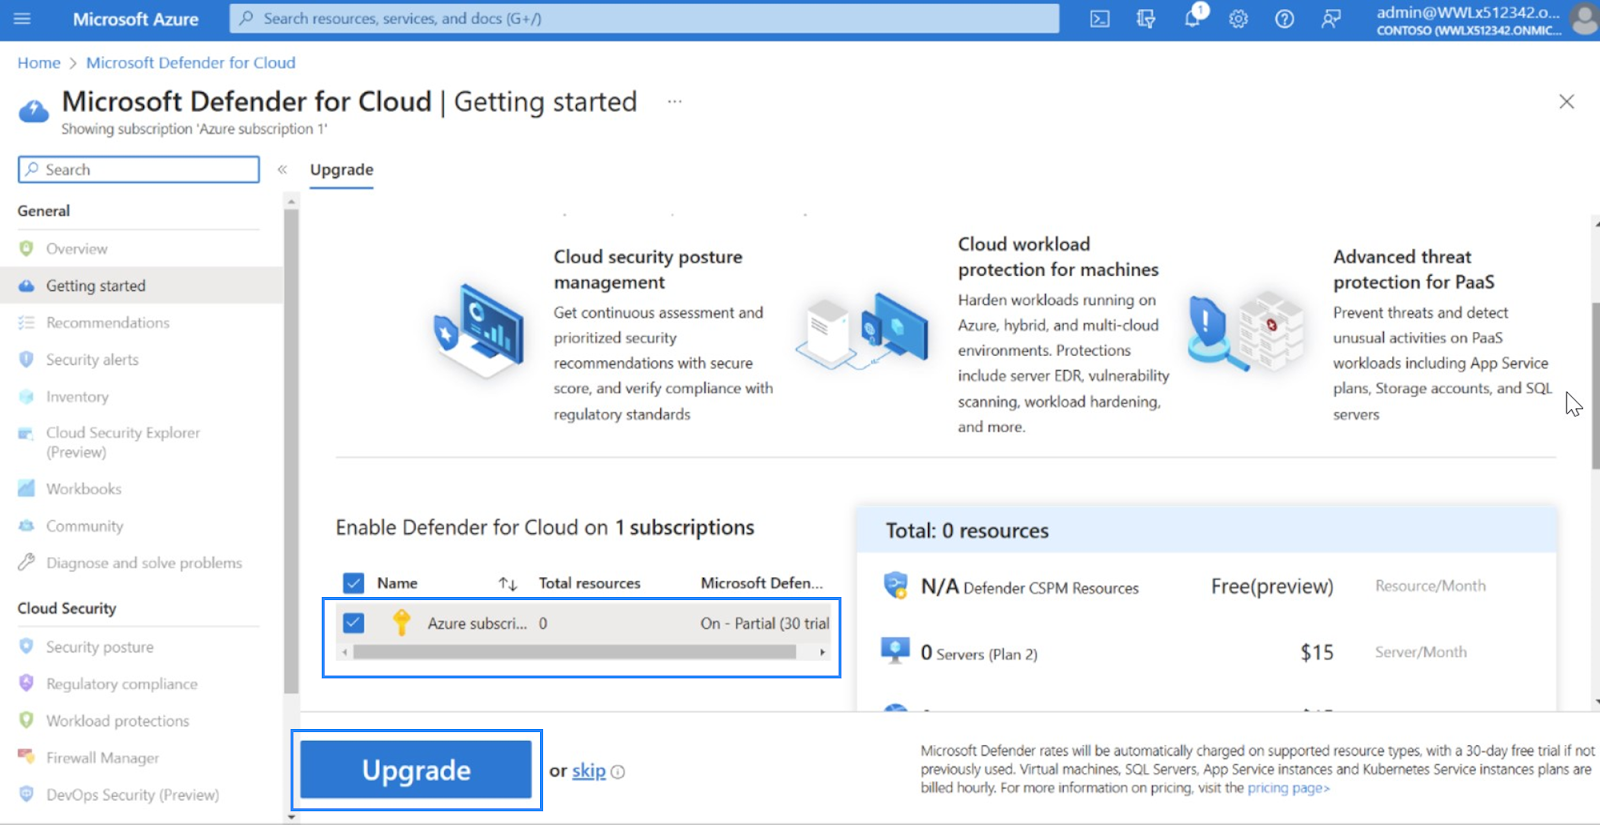 Microsoft Defender for Cloud